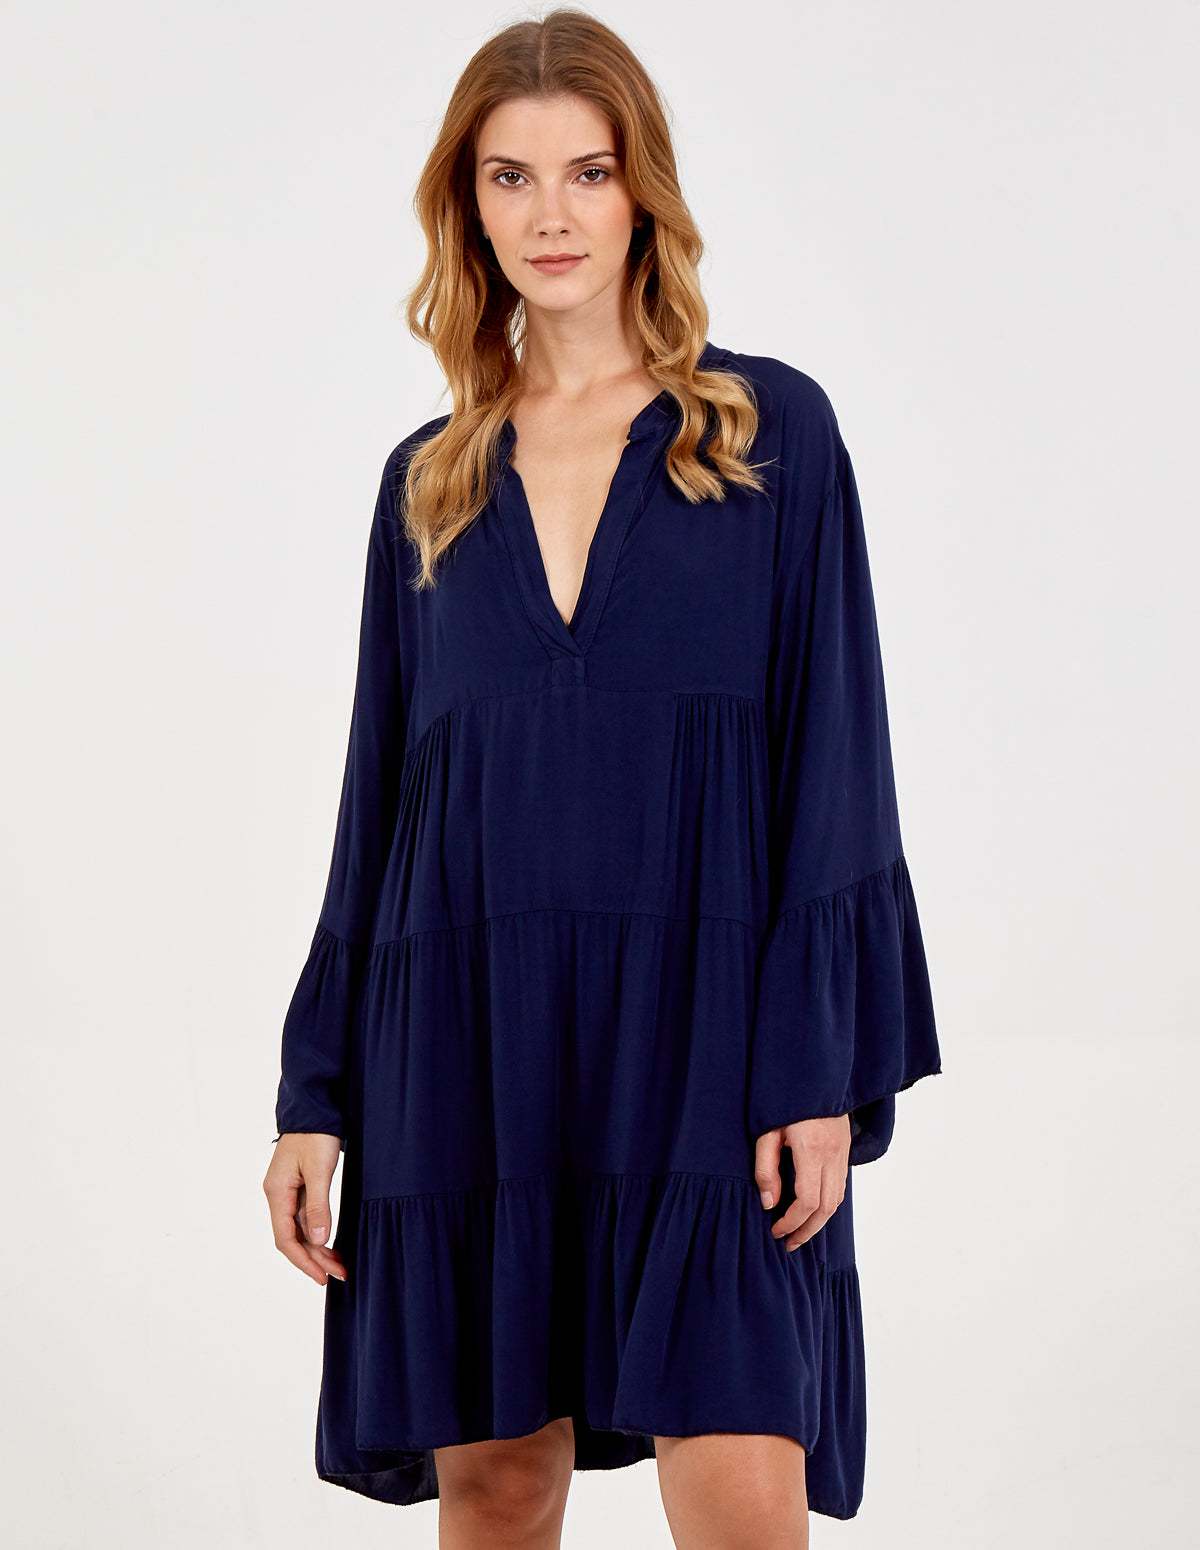 LIBBY - Long Sleeve Over Sized Tunic Dress 